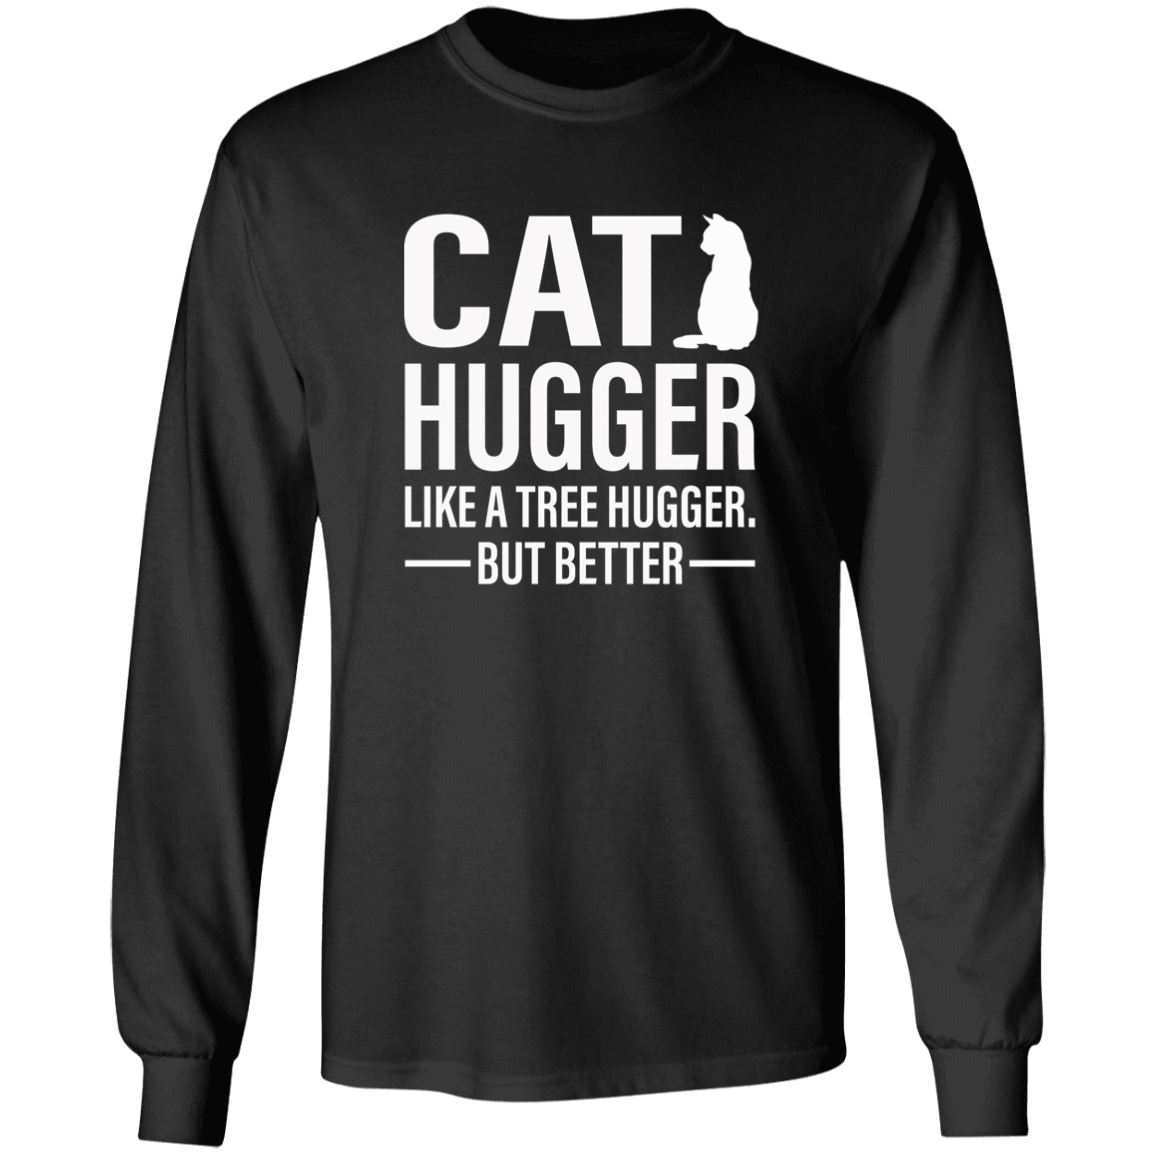 Cat Hugger - Long Sleeve T Shirt.